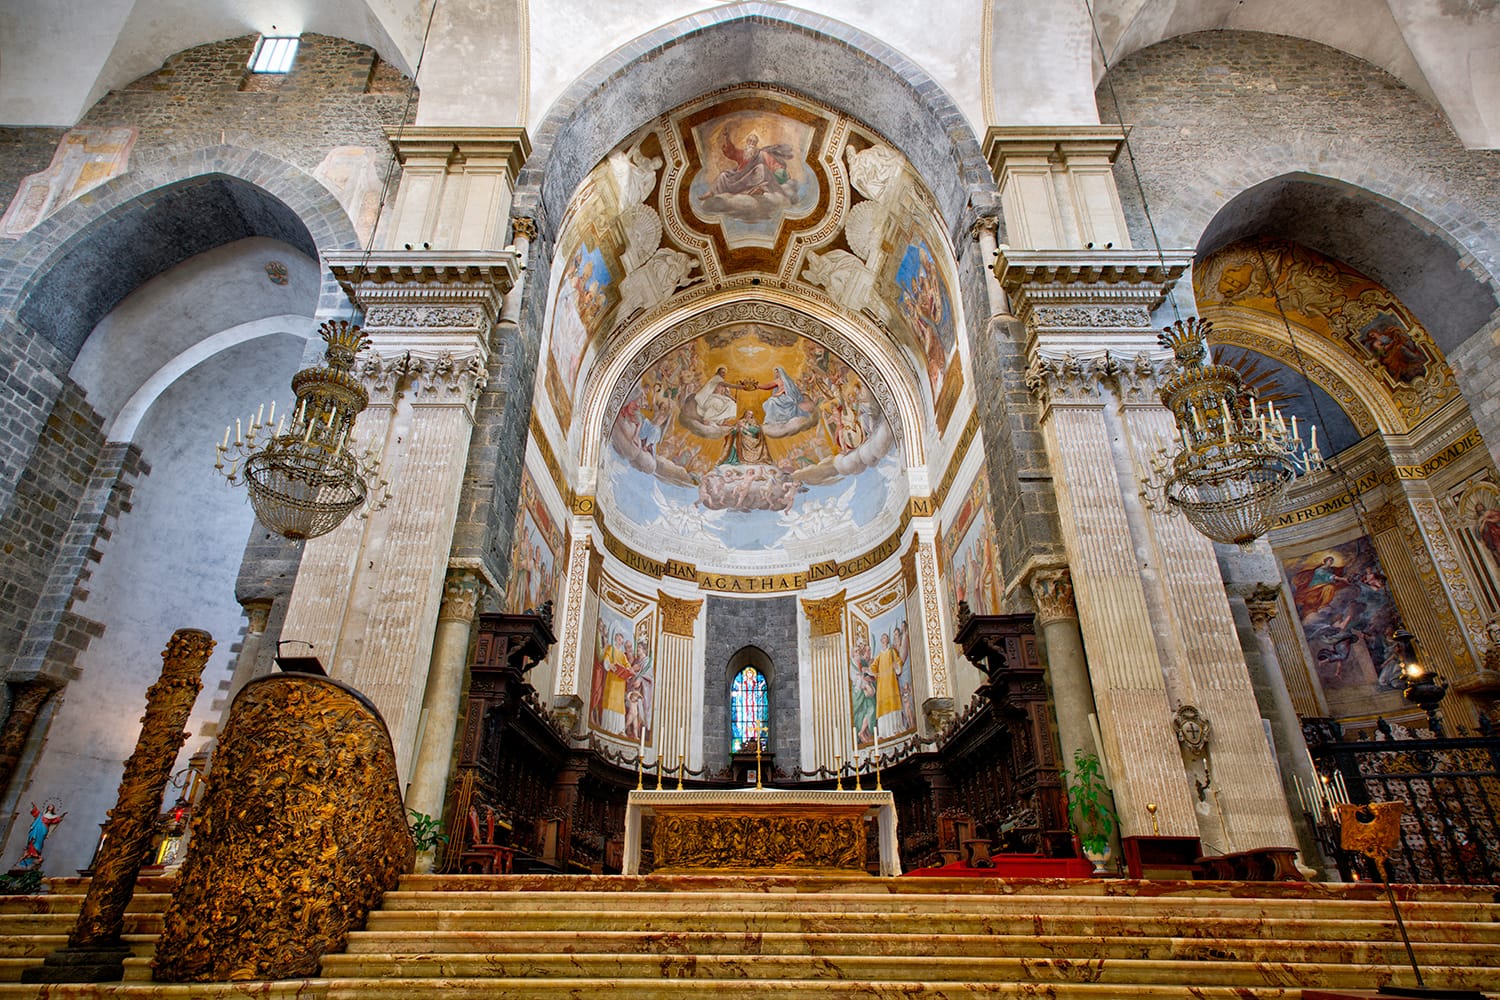 Catania Cathedral (Metropolitan Cathedral of Saint Agatha).